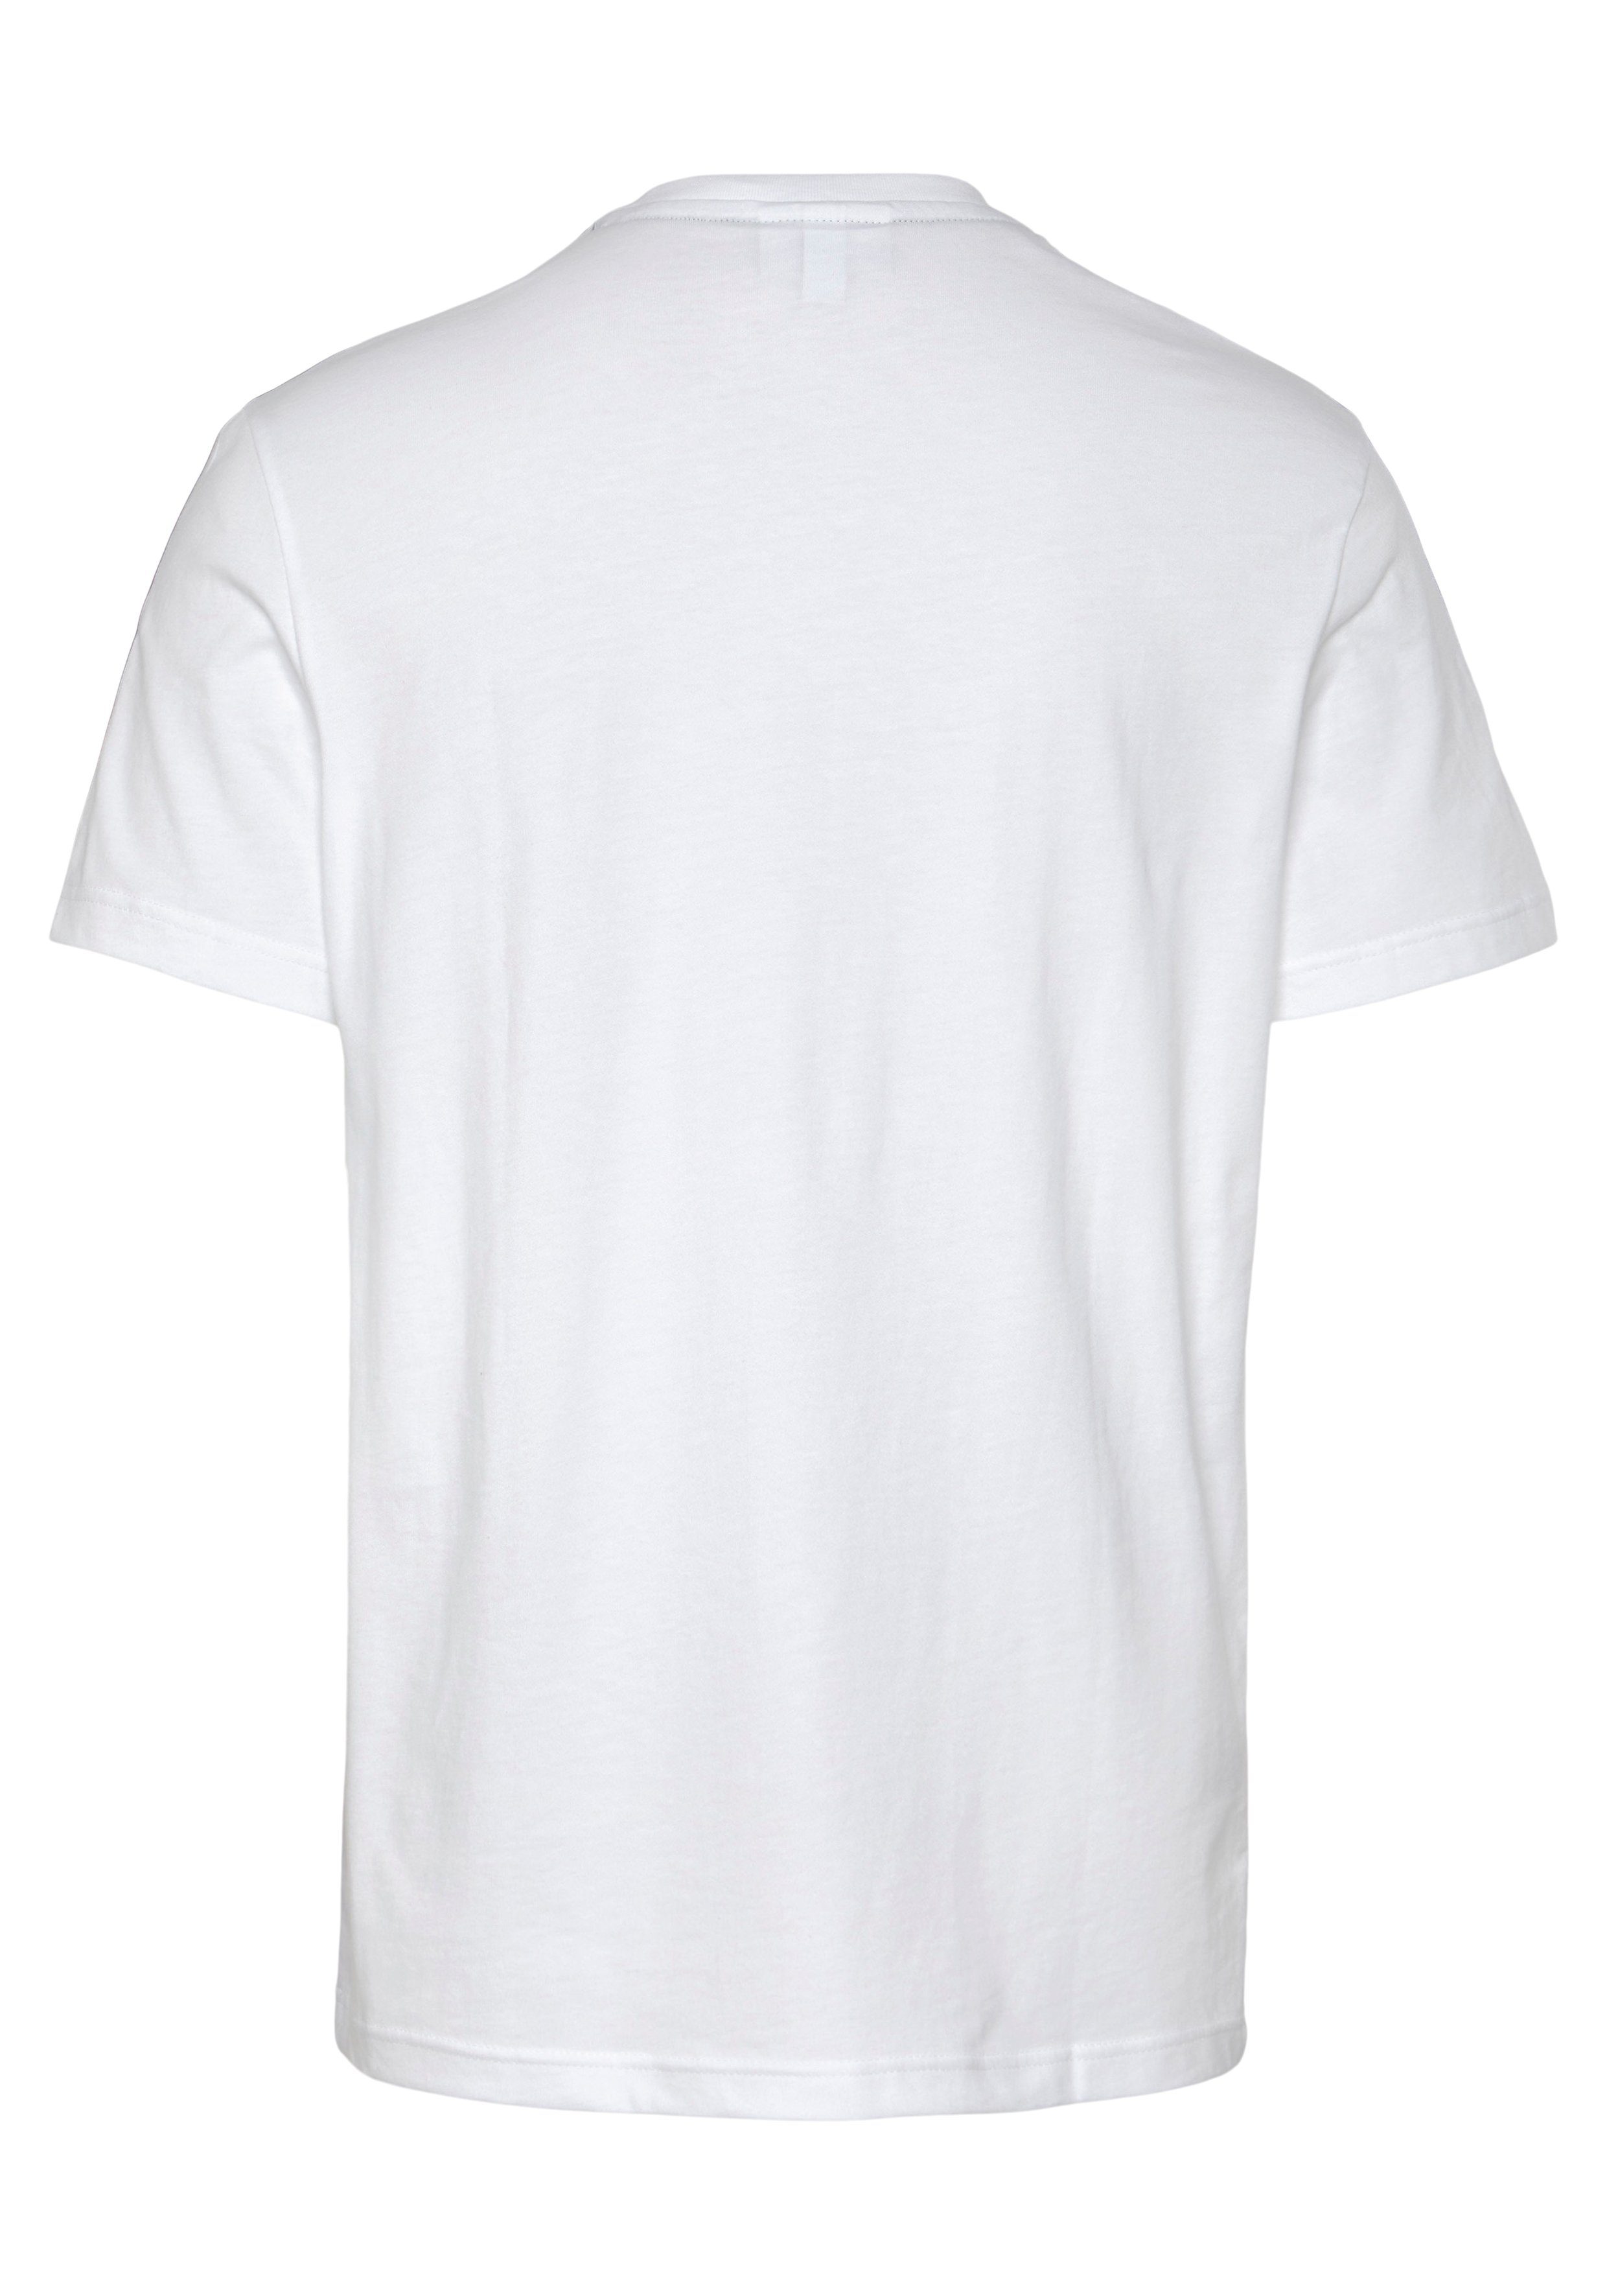 Lacoste T-Shirt mit beschriftetem den an white Kontrastband Schultern